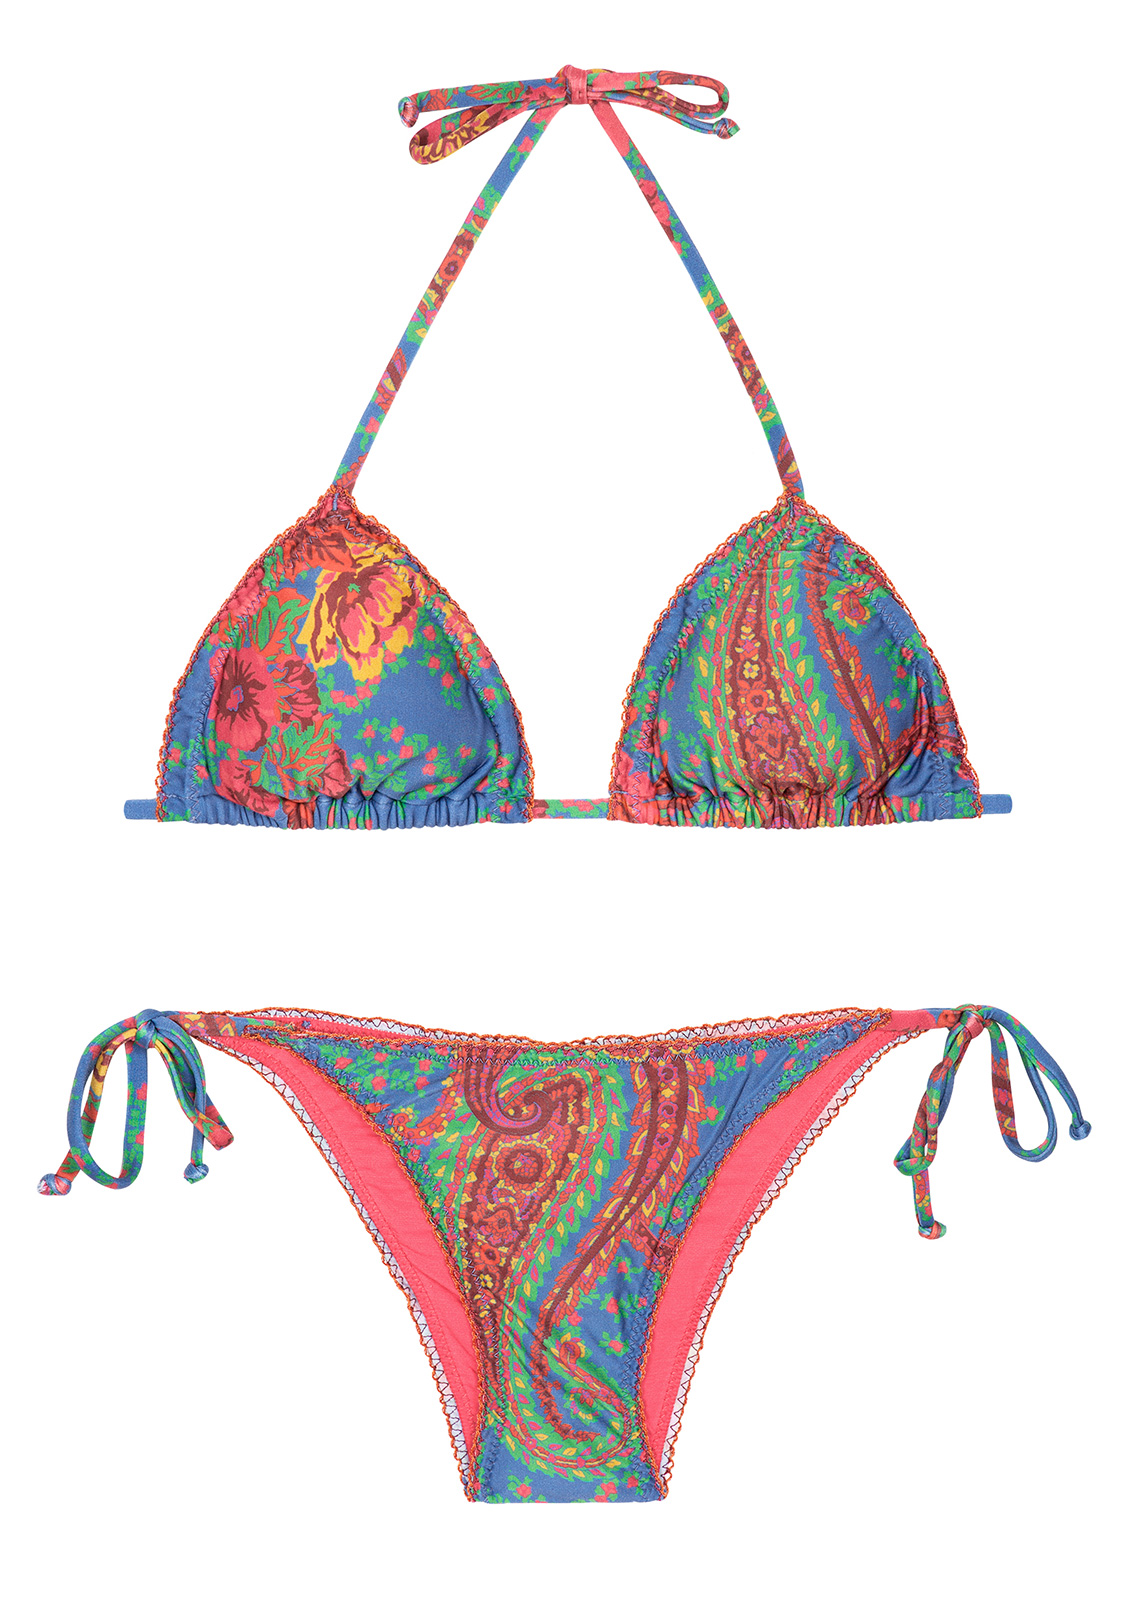 Salinas Floral Blue And Pink Lingerie-inspired Bikini - Lumina